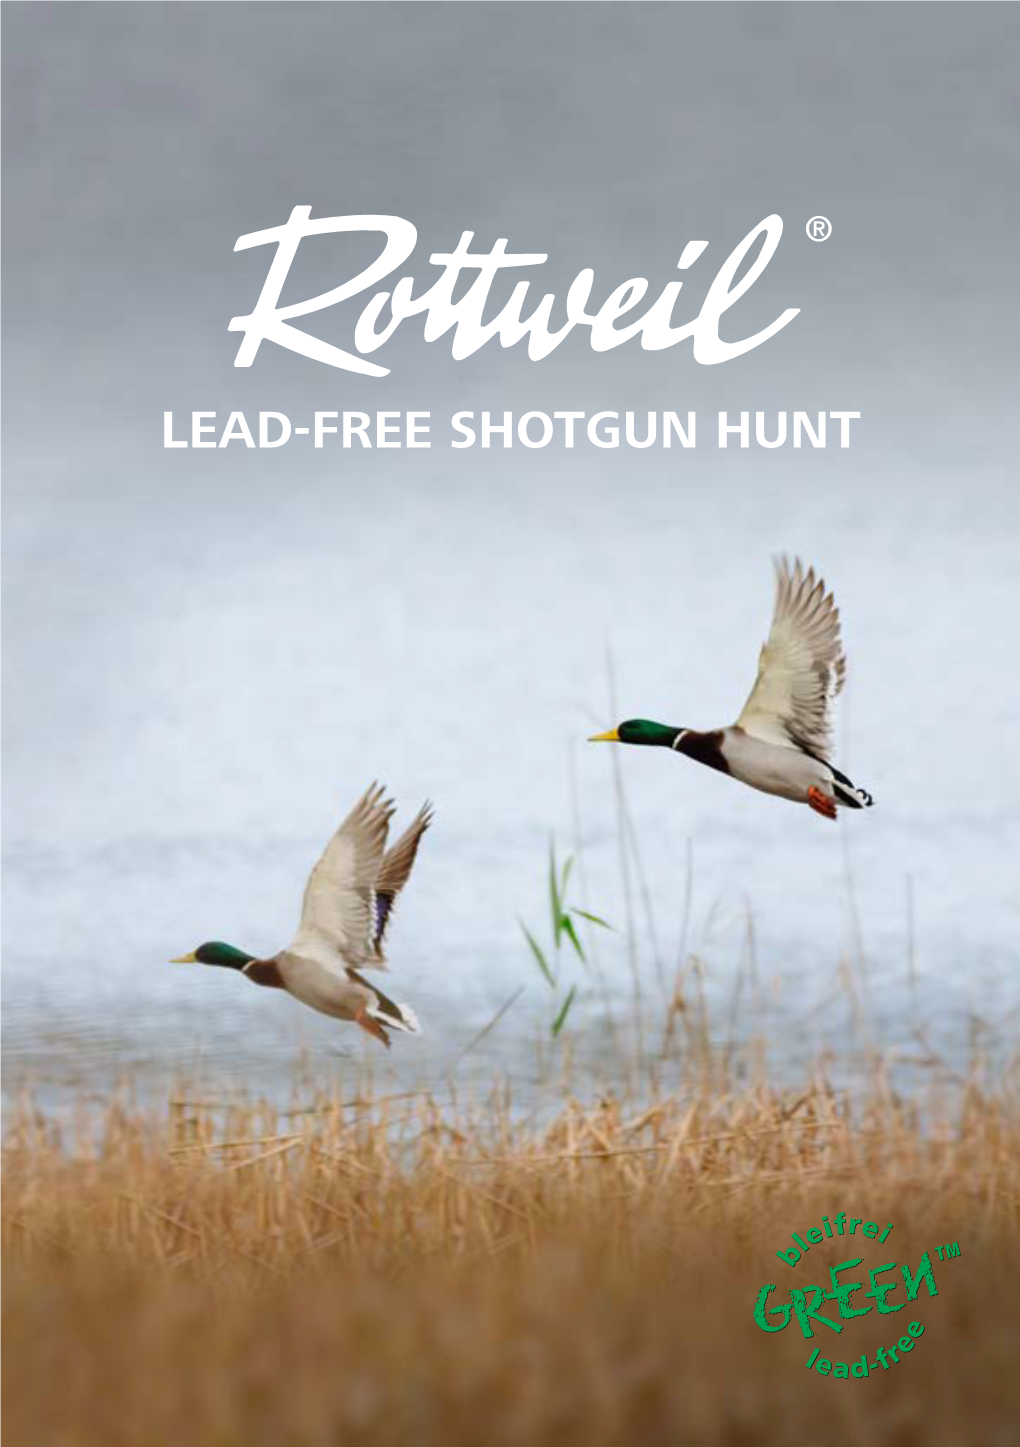 Lead-Free Shotgun Hunt 2 | Rottweil | Lead-Free Shotgun Hunt the Fascination of Dynamic